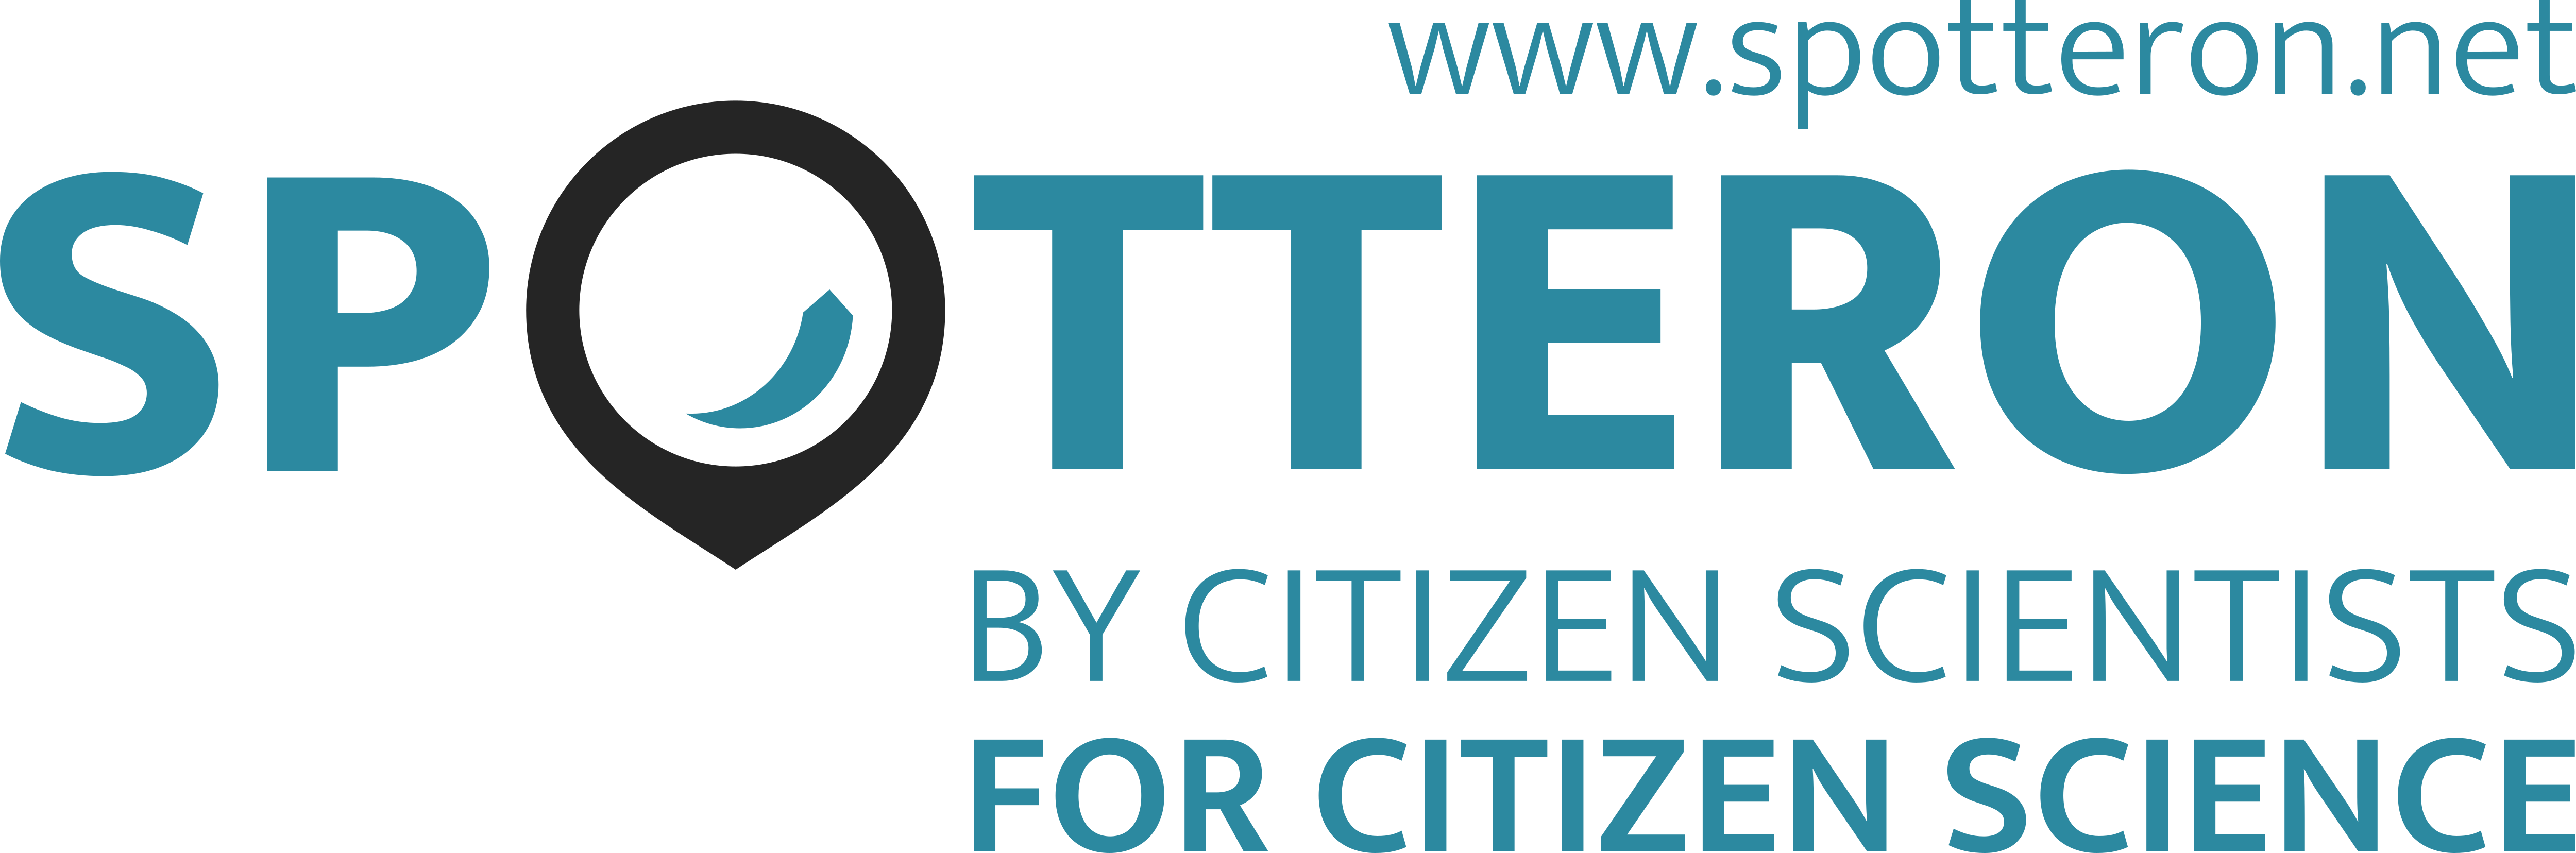 spotteron logo bycitizenscientists url